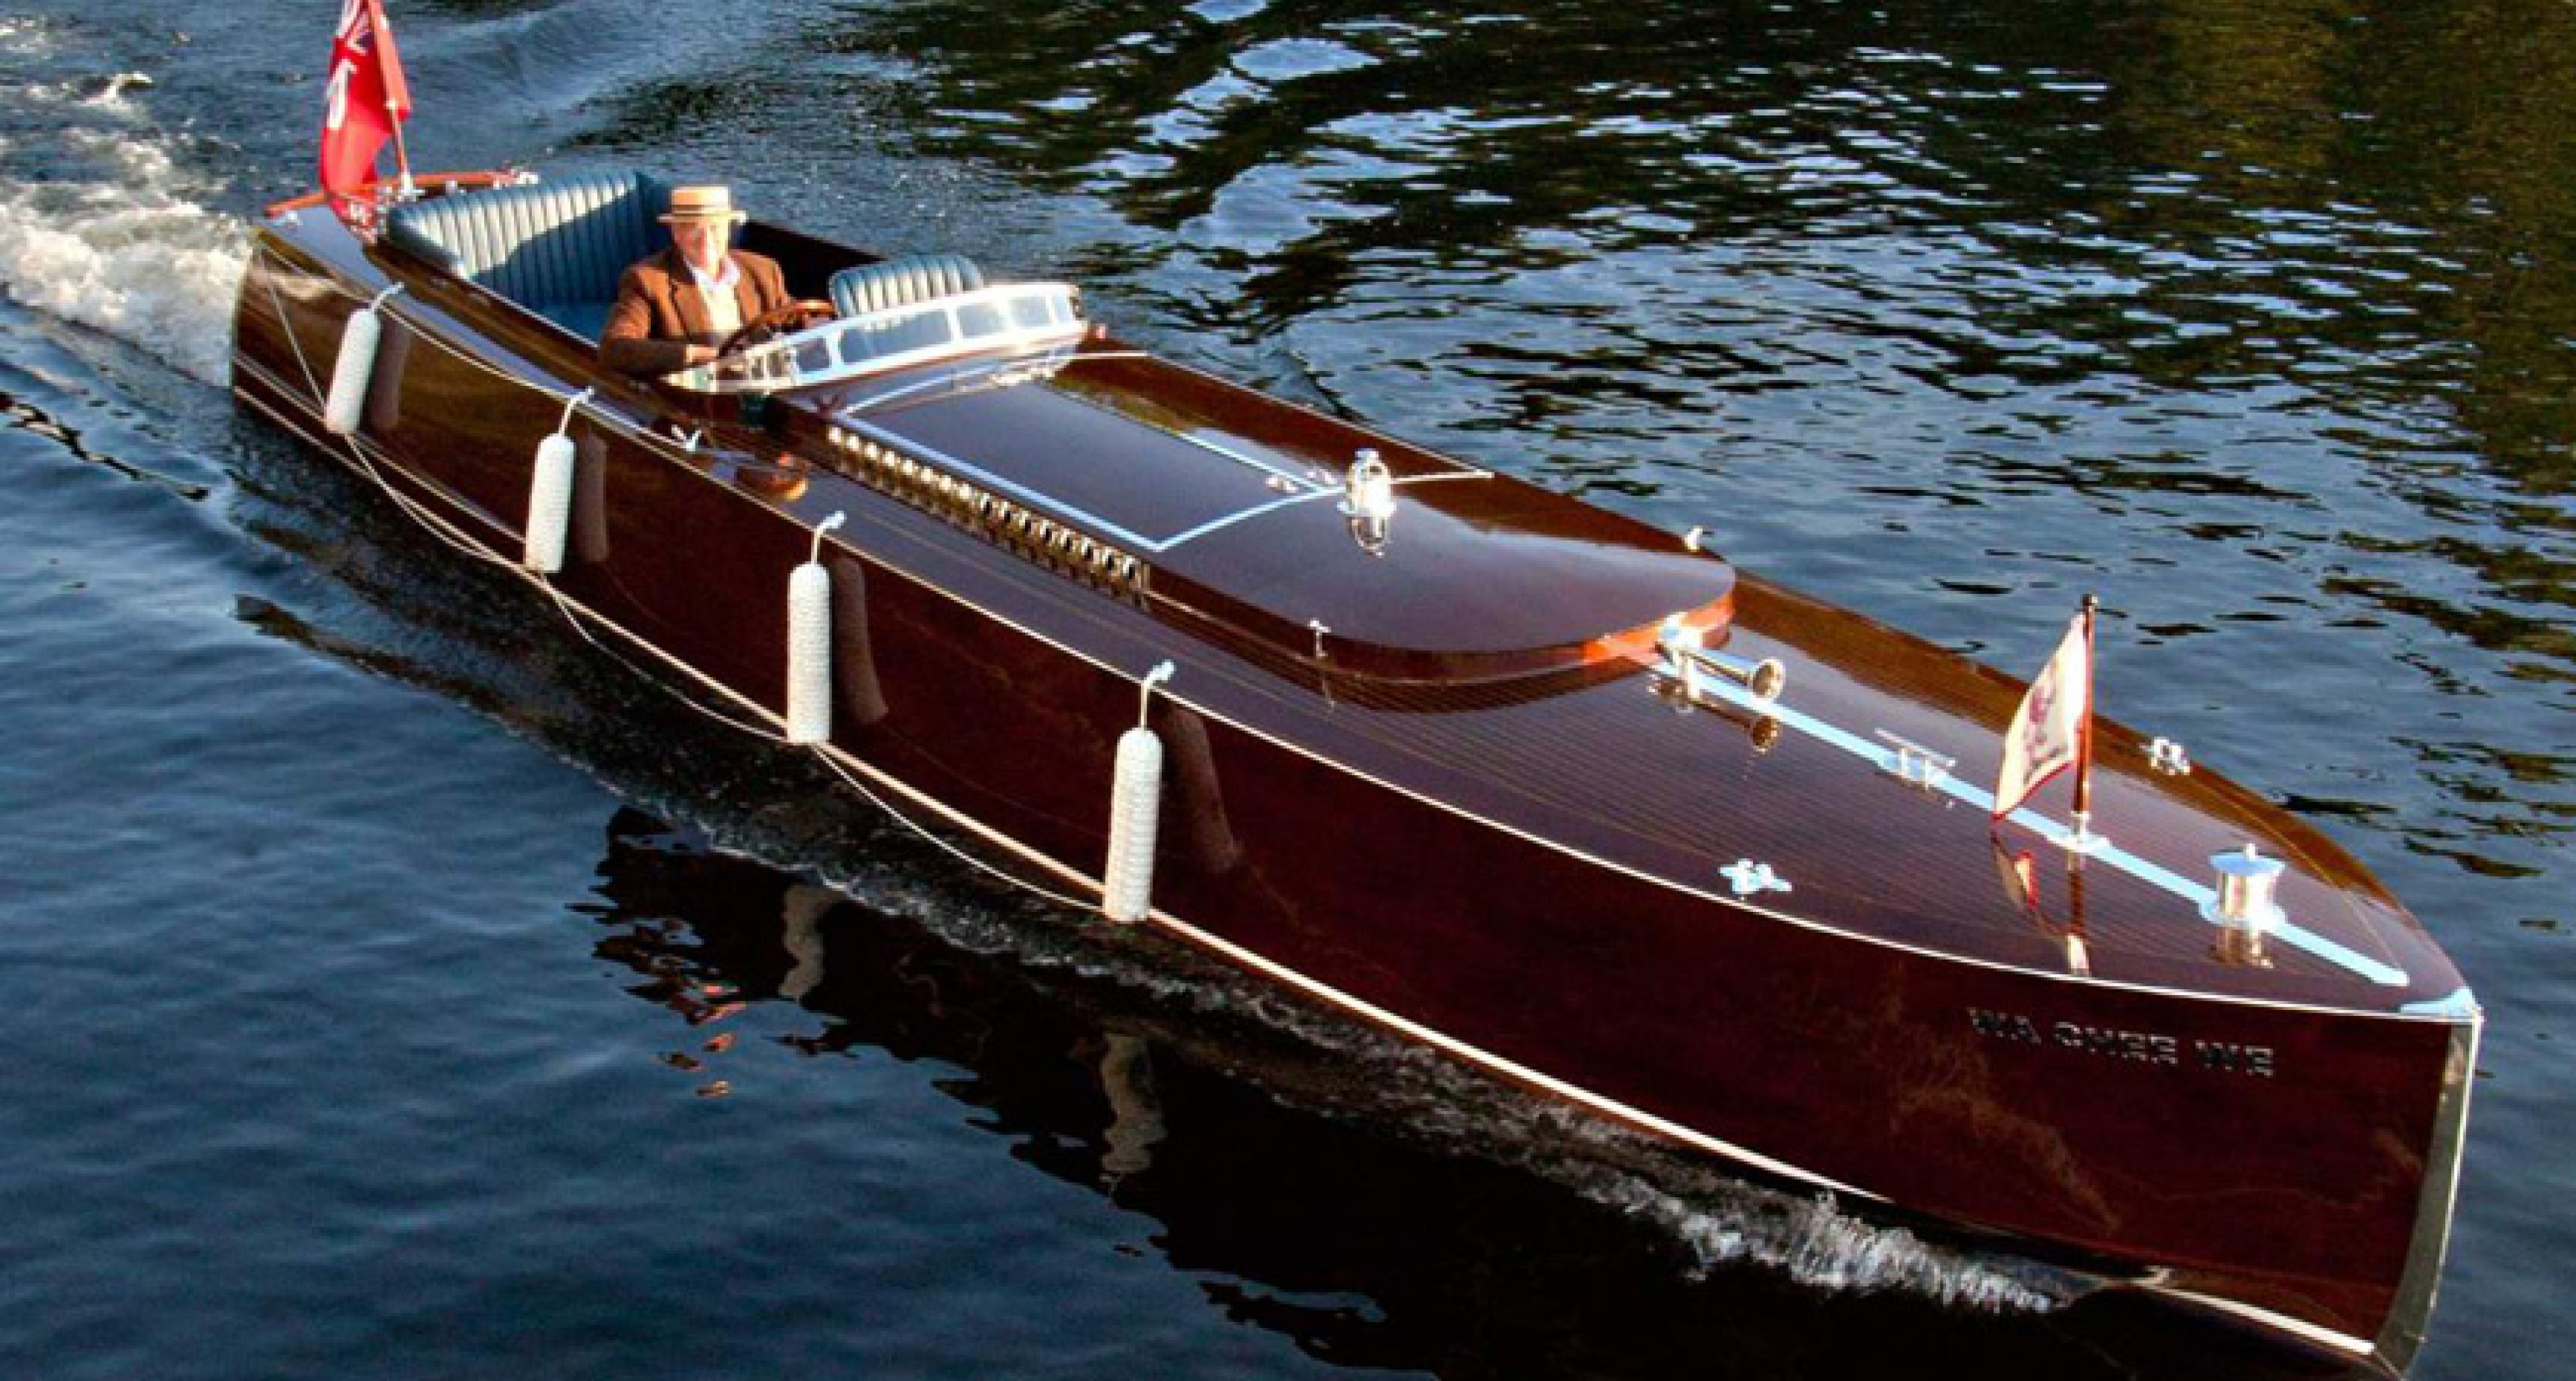 Handmade in Canadian wood: The boats of Muskoka Classic 